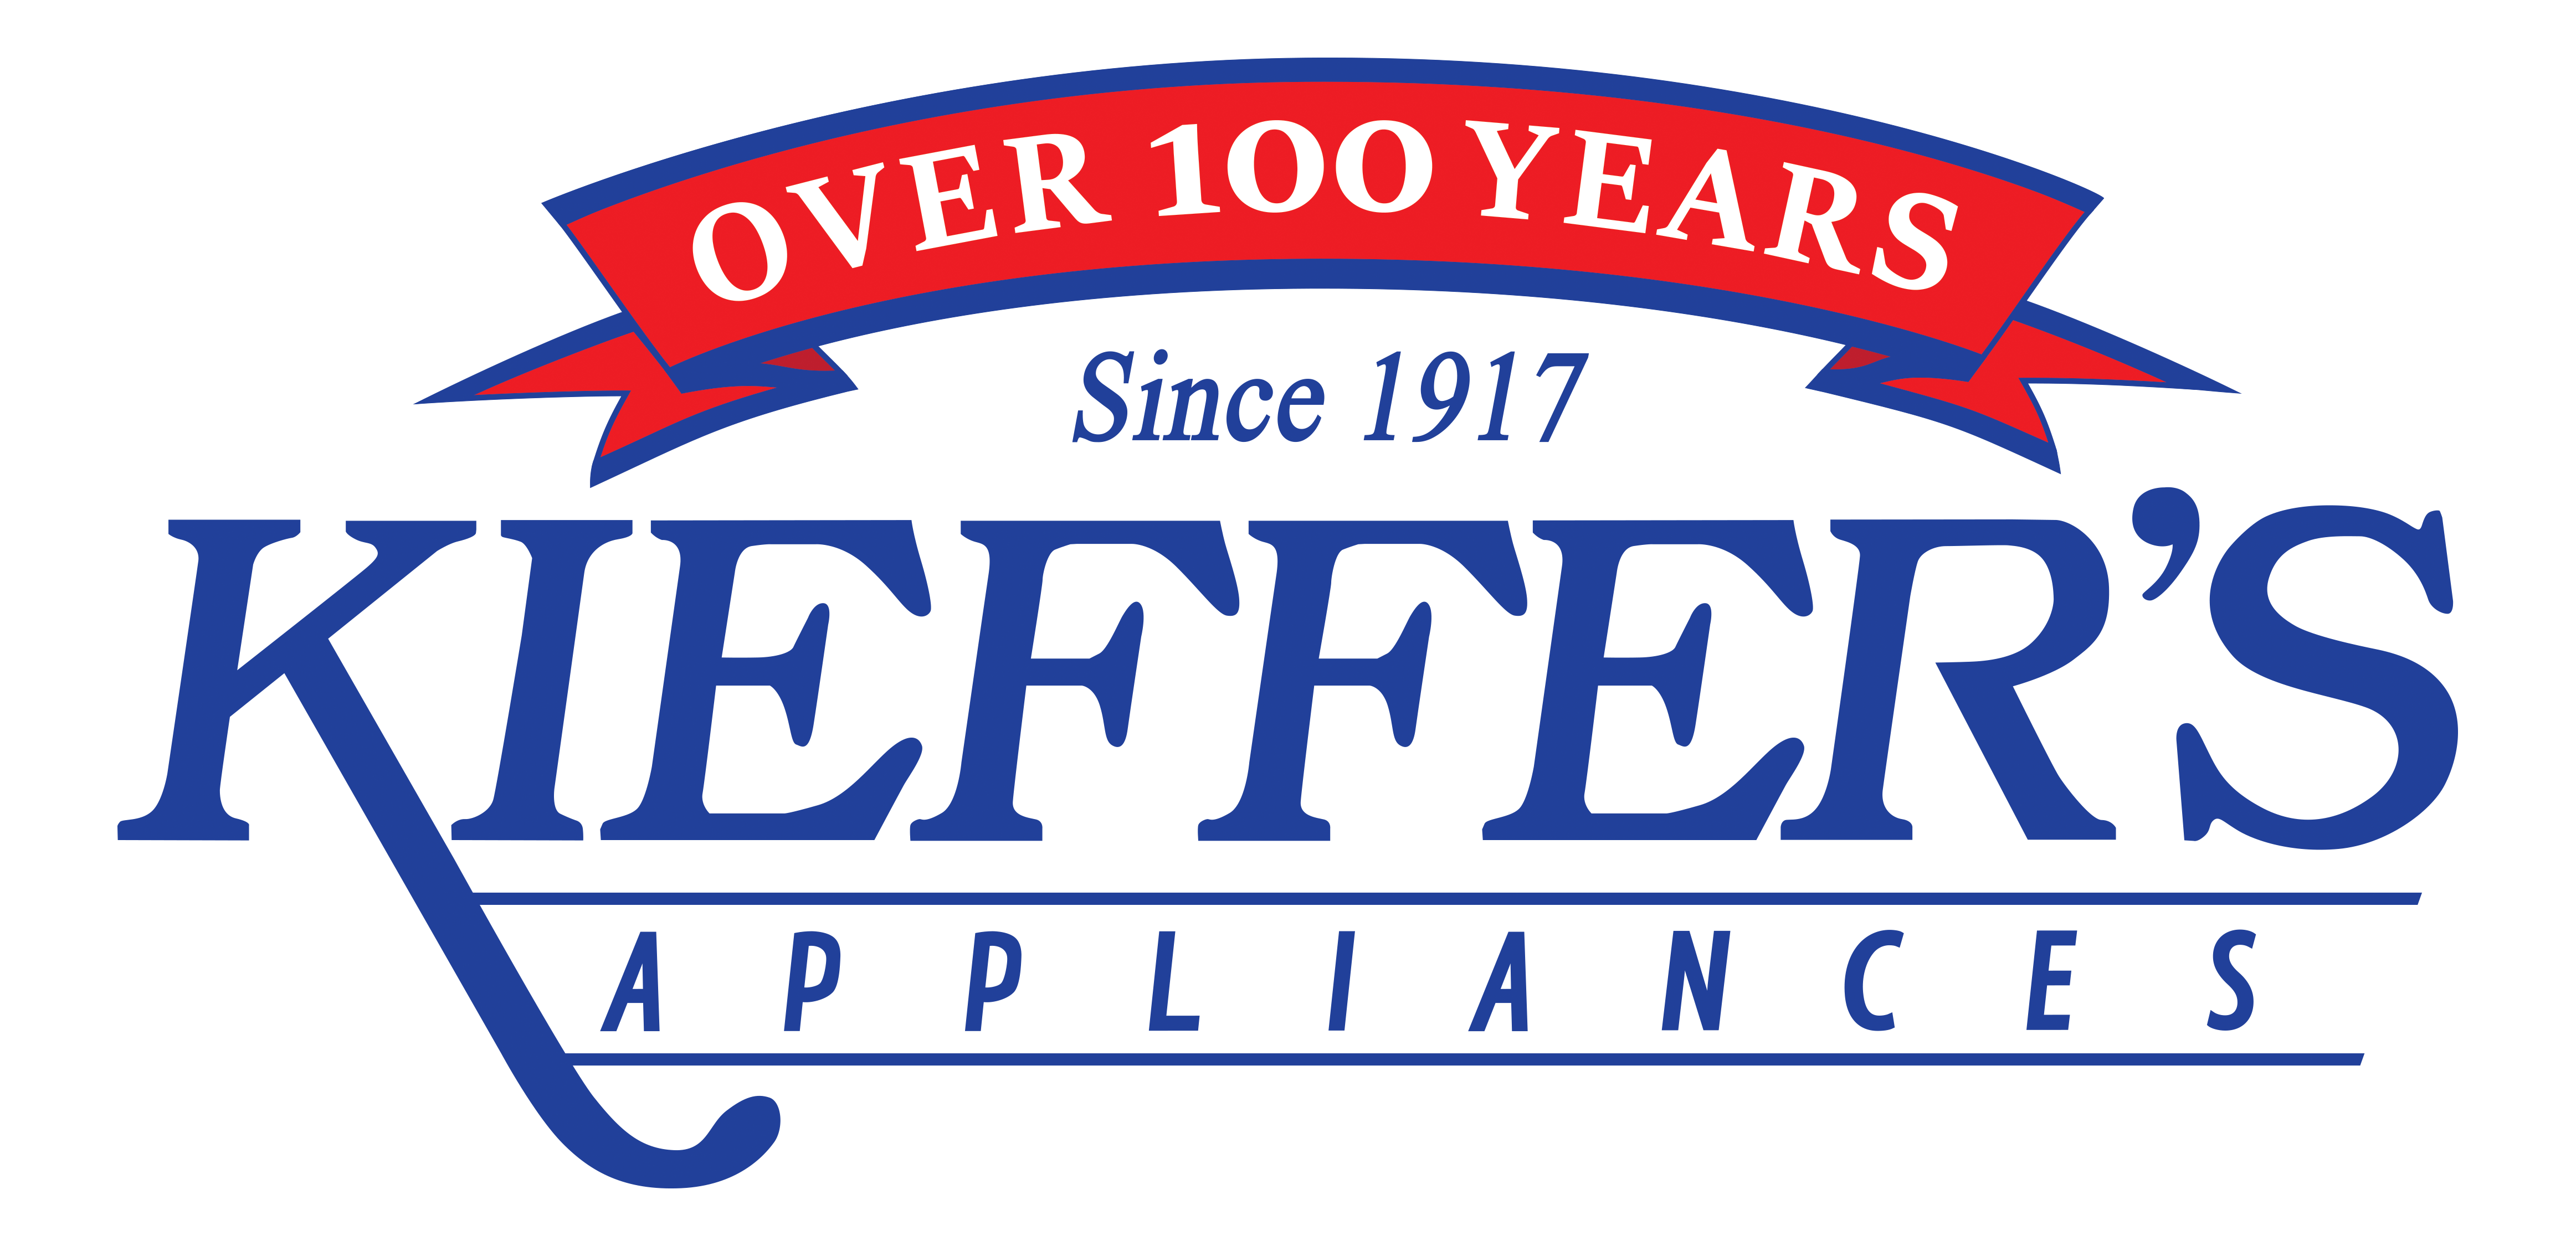 Kieffers logo color hi rez